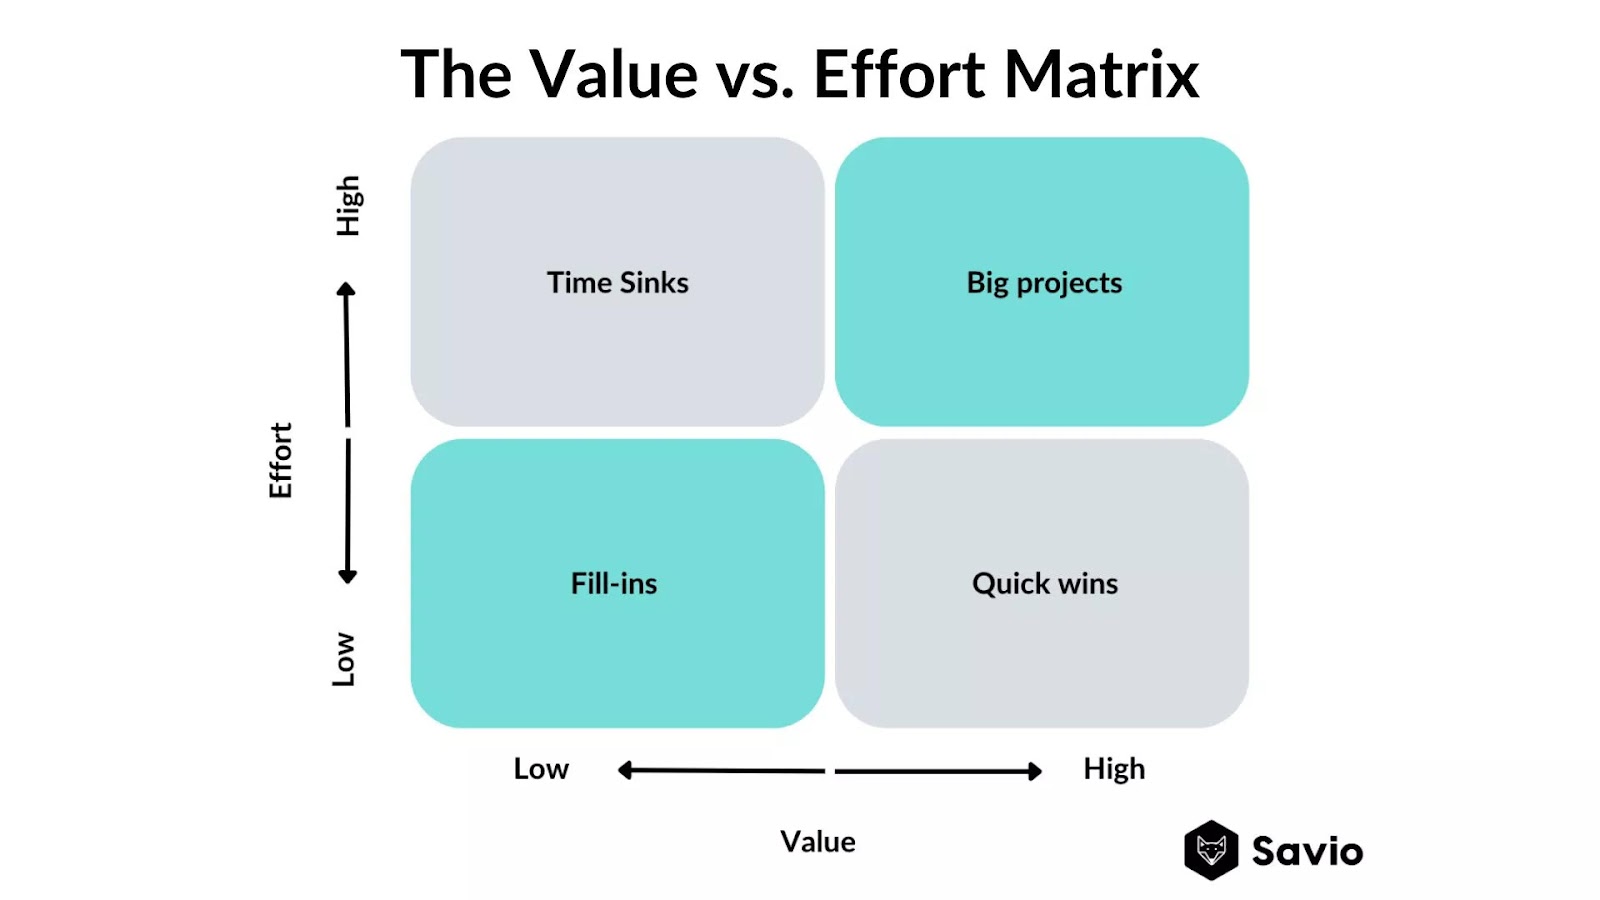 Value vs. effort